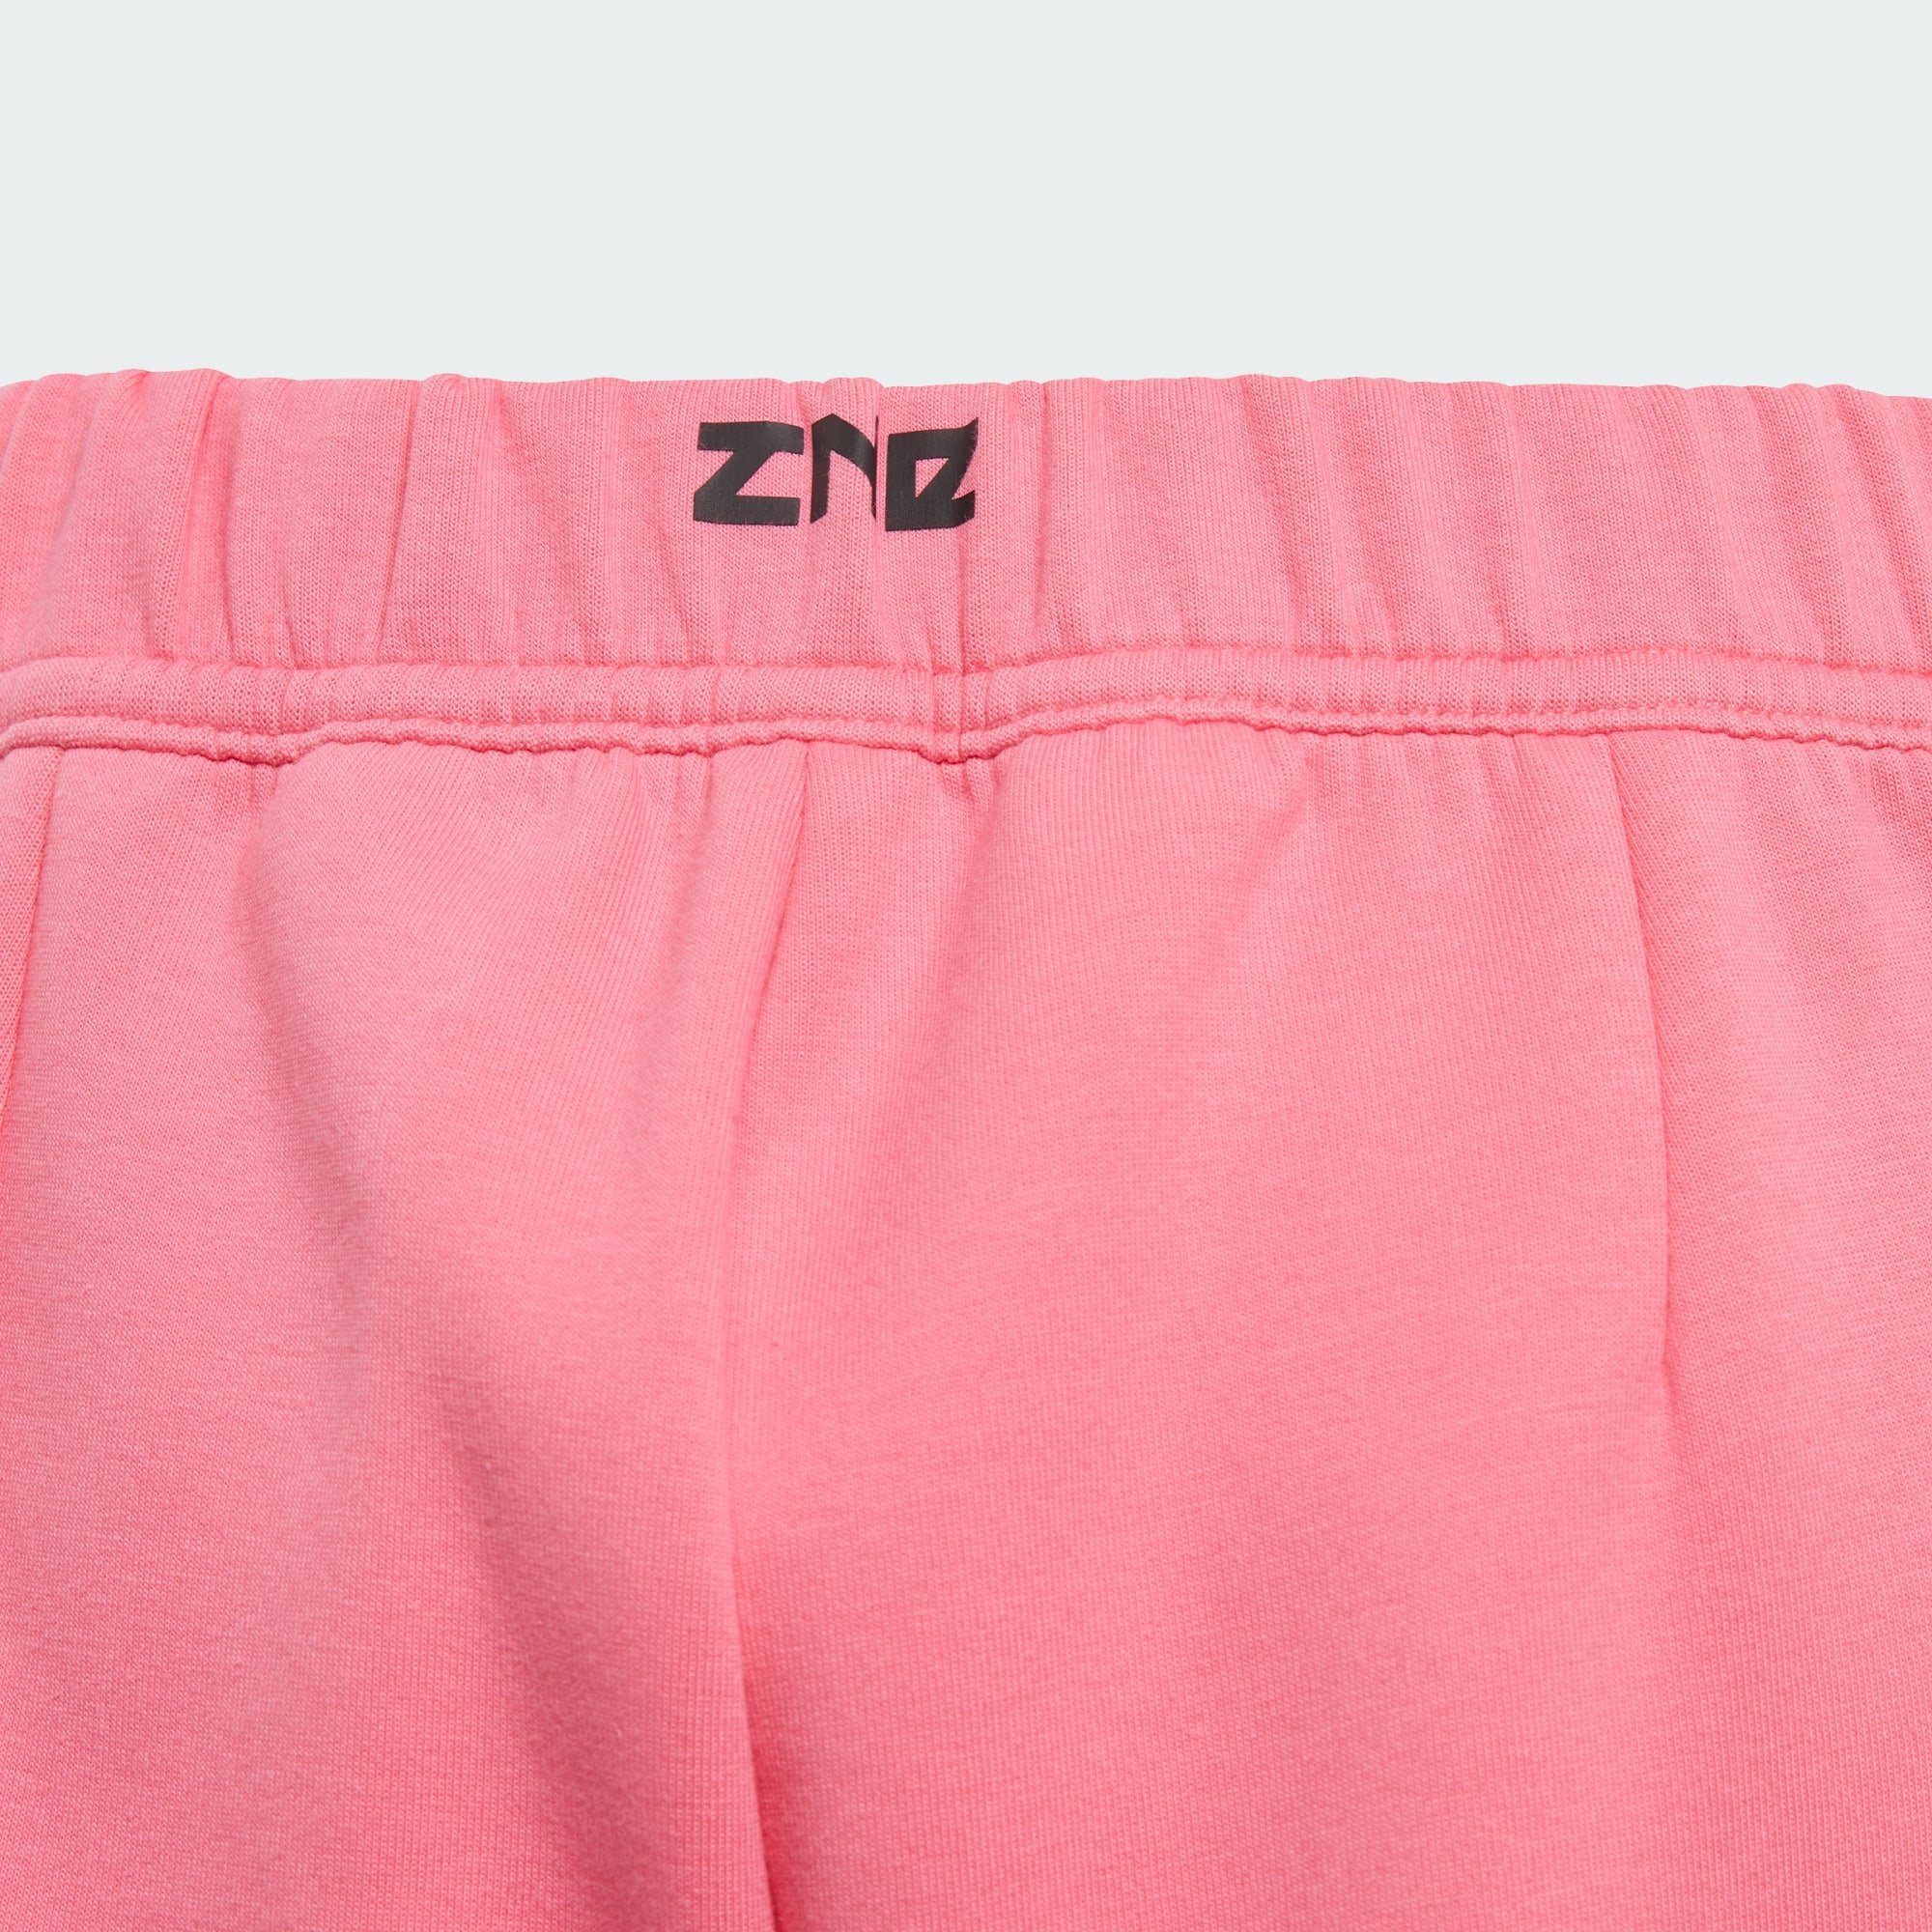 adidas Sportswear HOSE Pink ADIDAS KIDS Z.N.E. Jogginghose Fusion